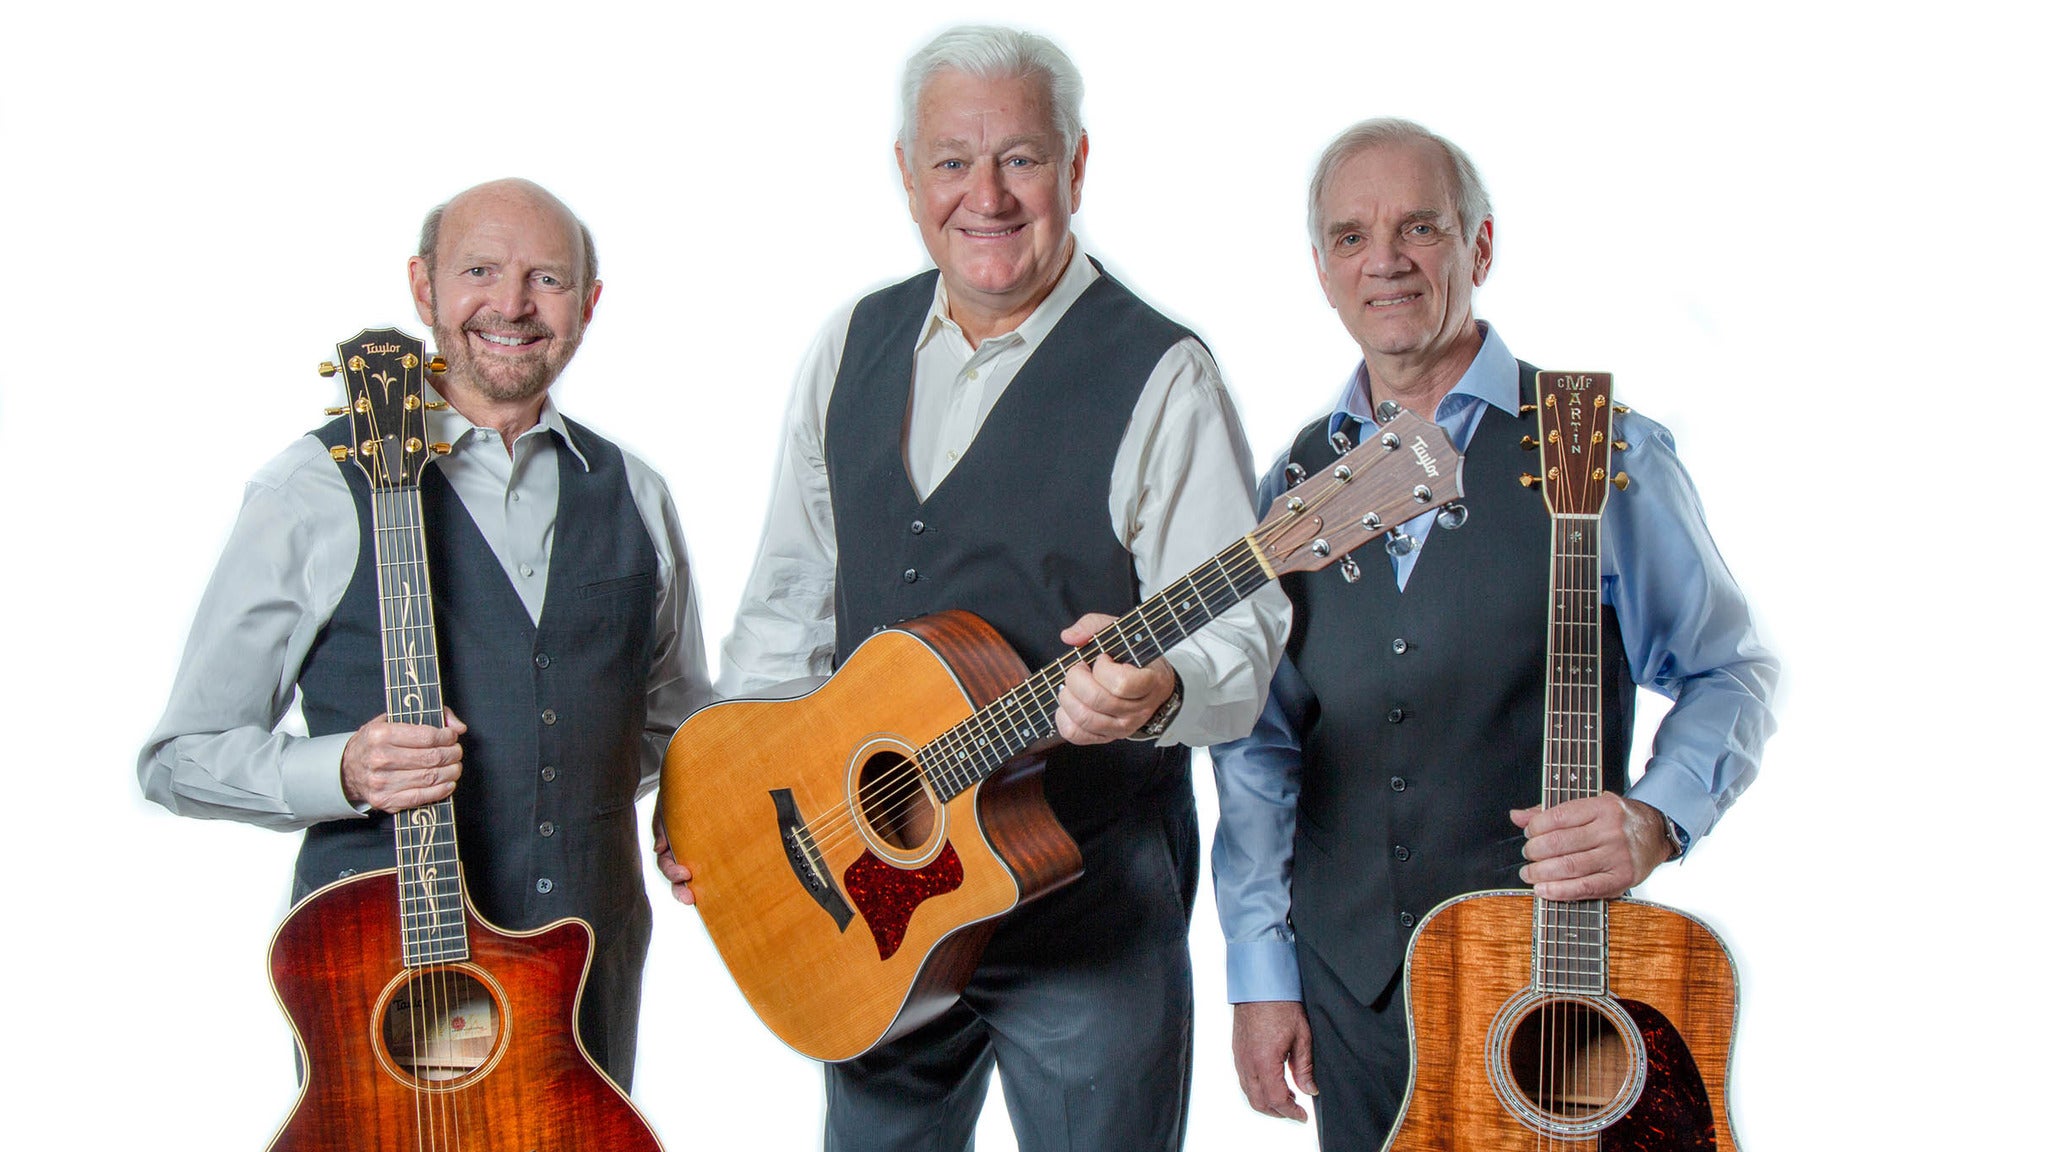 Folk Legacy Trio in Chandler promo photo for Ticketmaster presale offer code